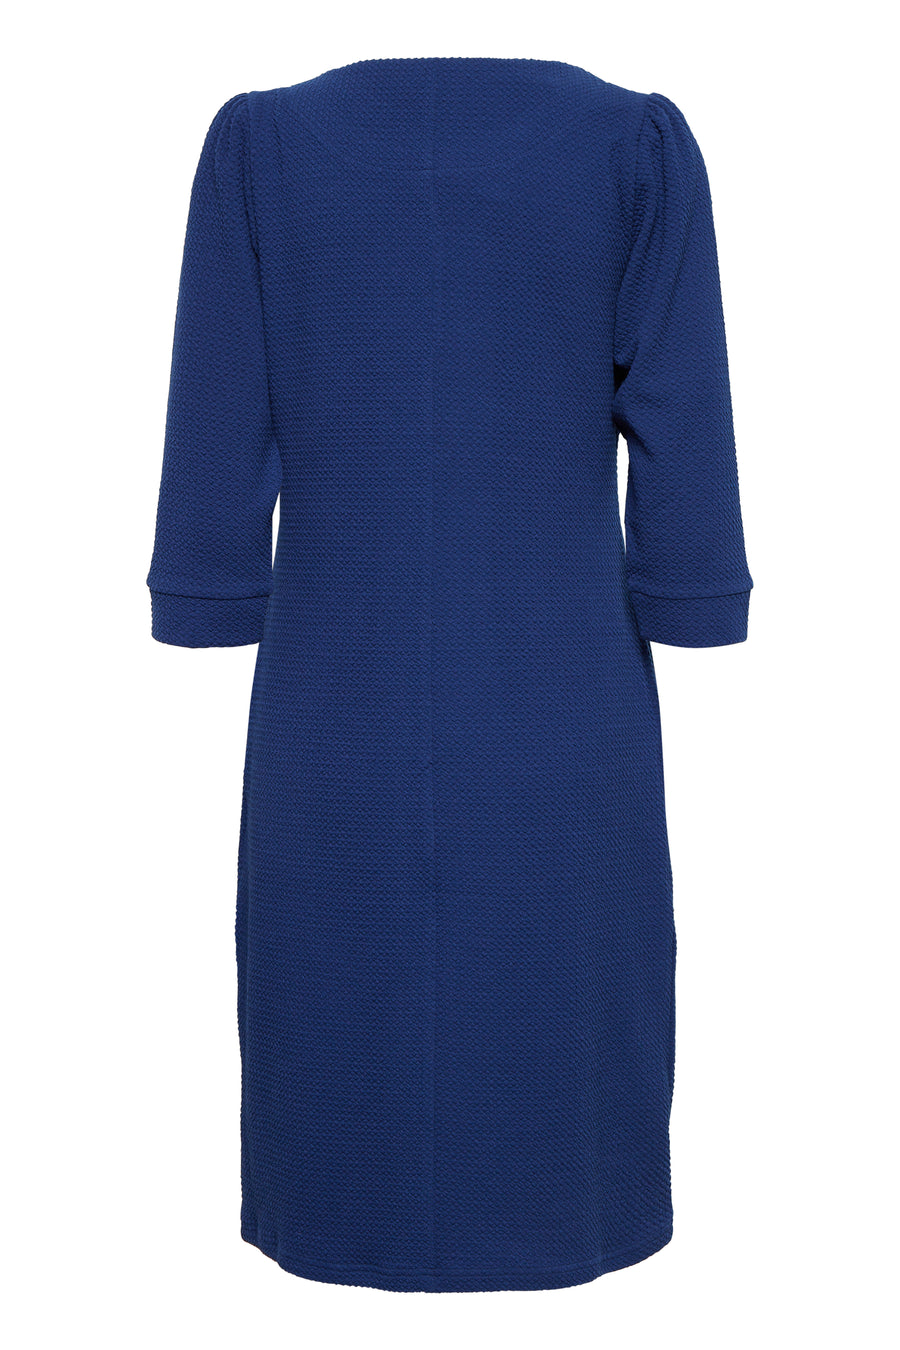 Fransa Carly blue dress 20612489